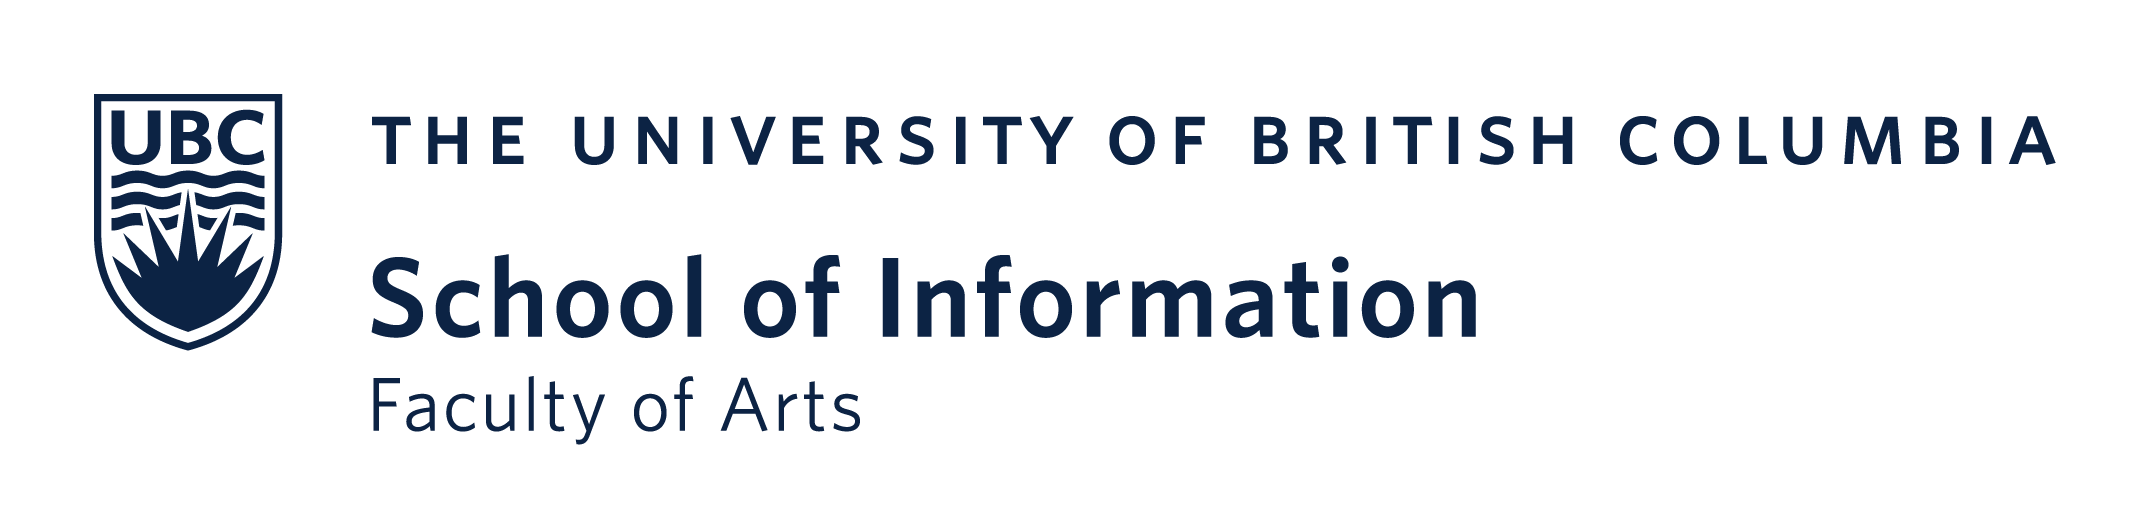 School of Information, UBC